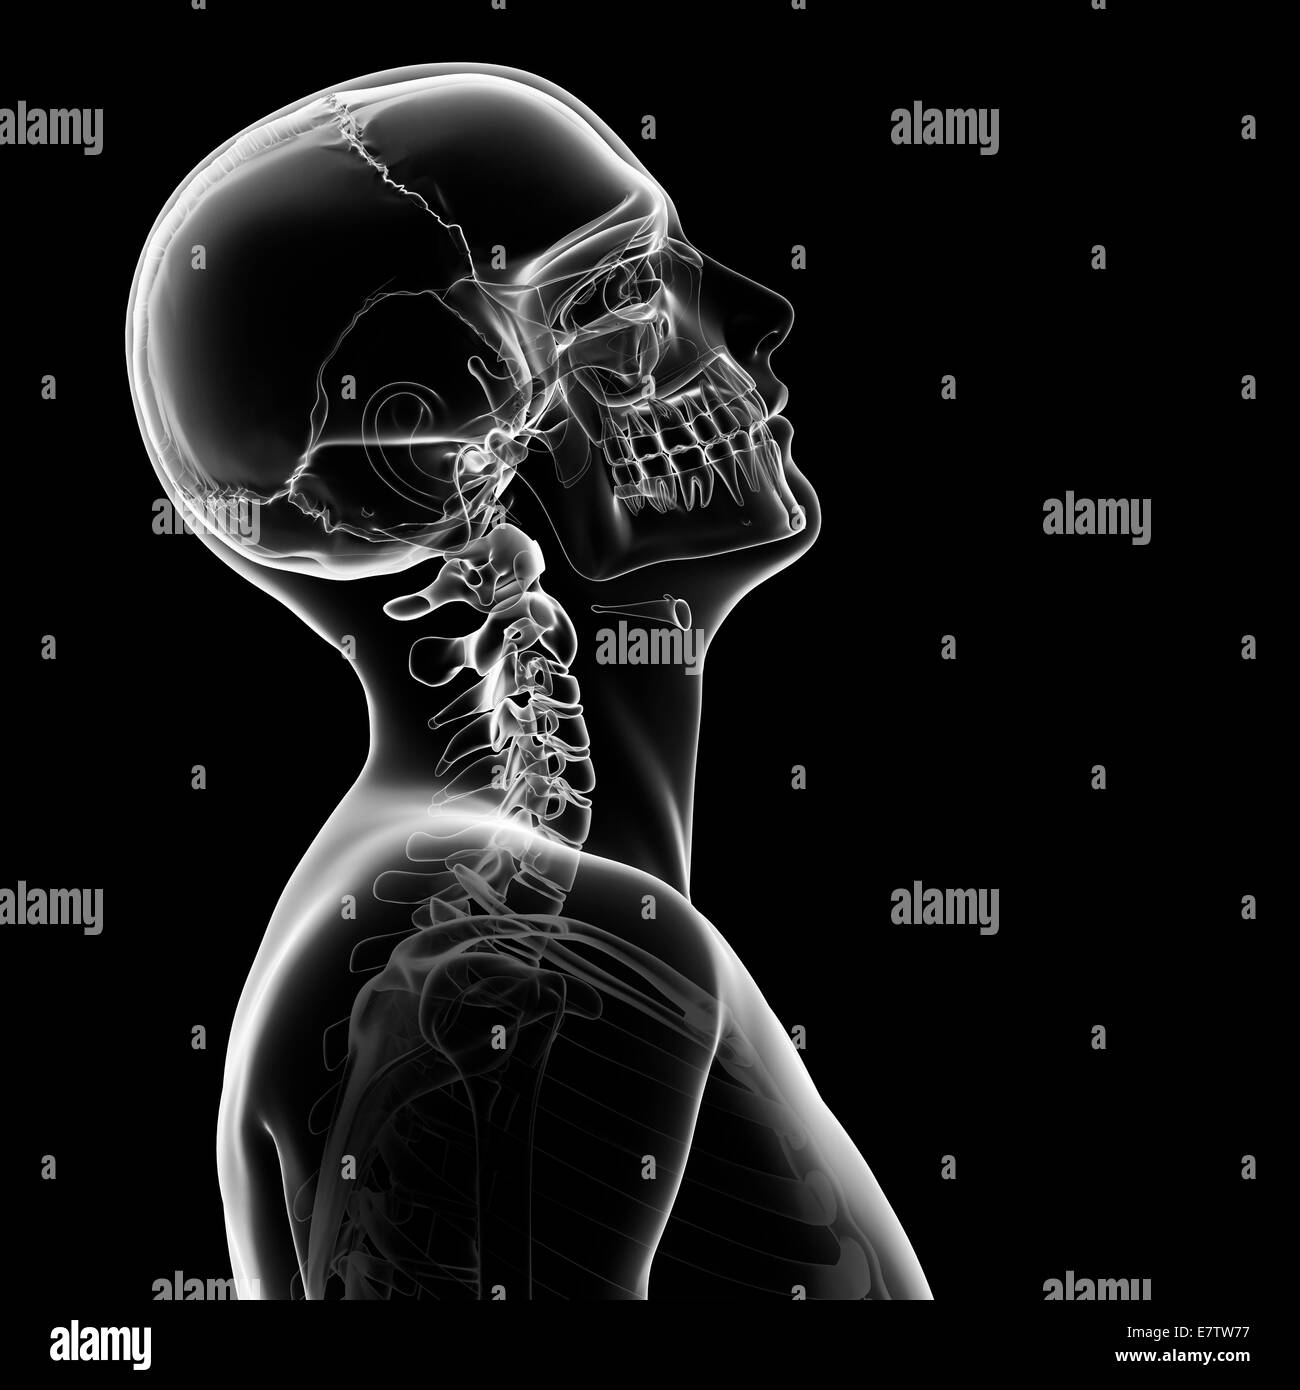 Human skull and neck bones, computer artwork. Stock Photo